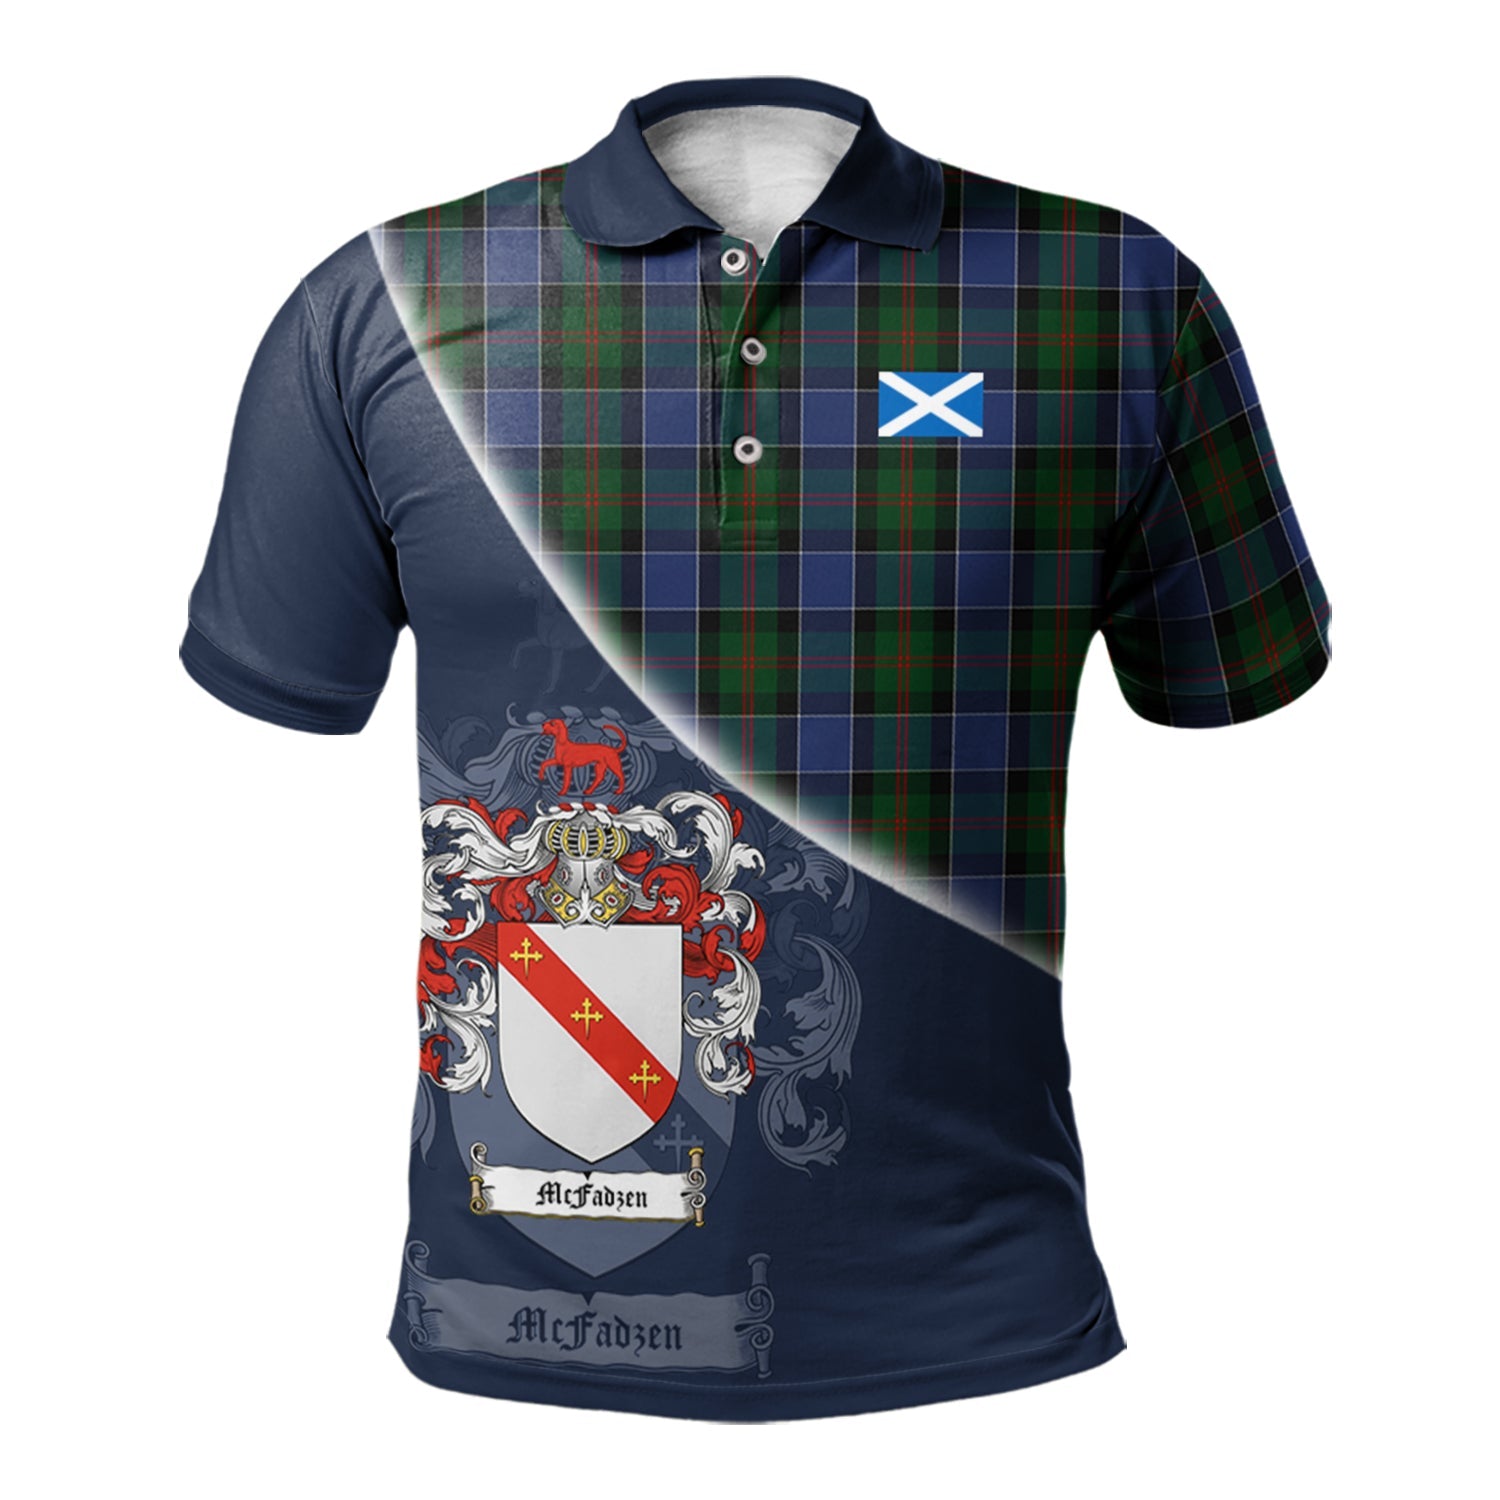 scottish-mcfadzen-01-clan-crest-tartan-scotland-flag-half-style-polo-shirt